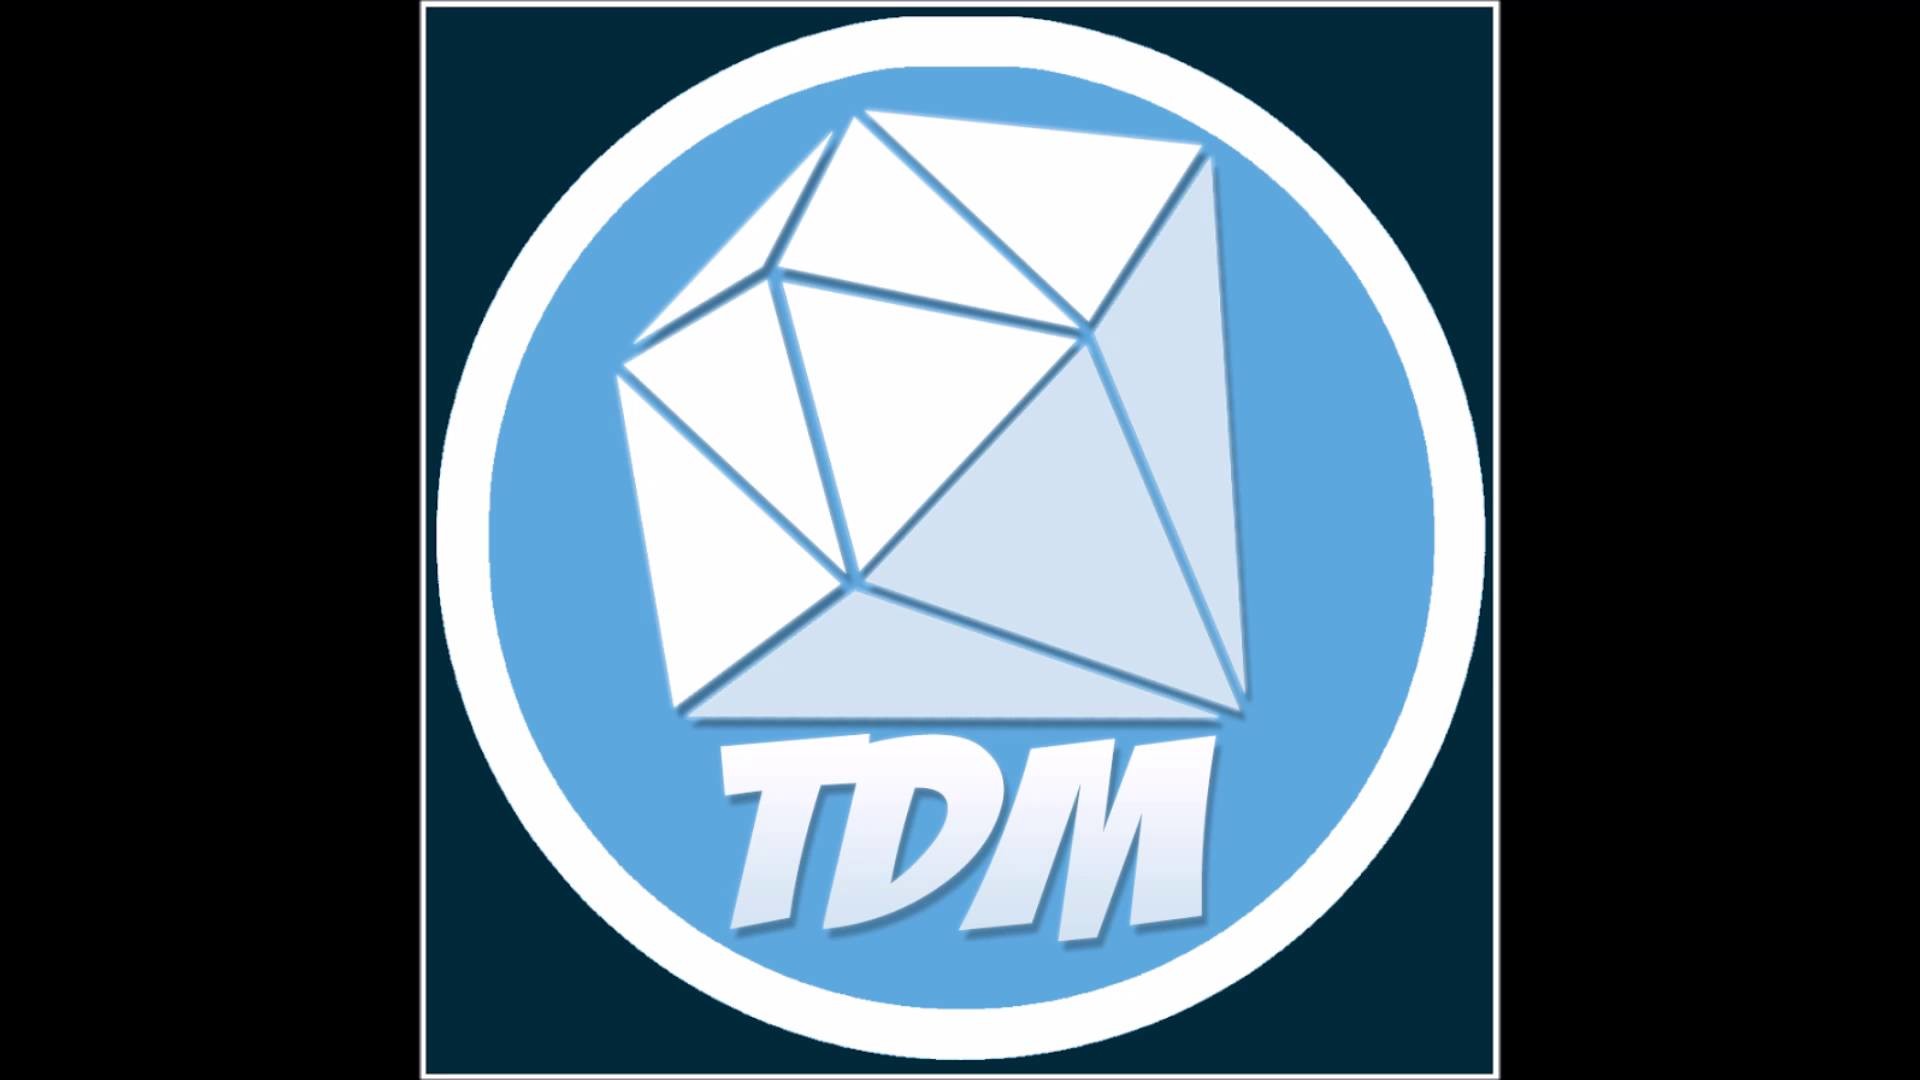 The Diamond Minecart TDM Outro